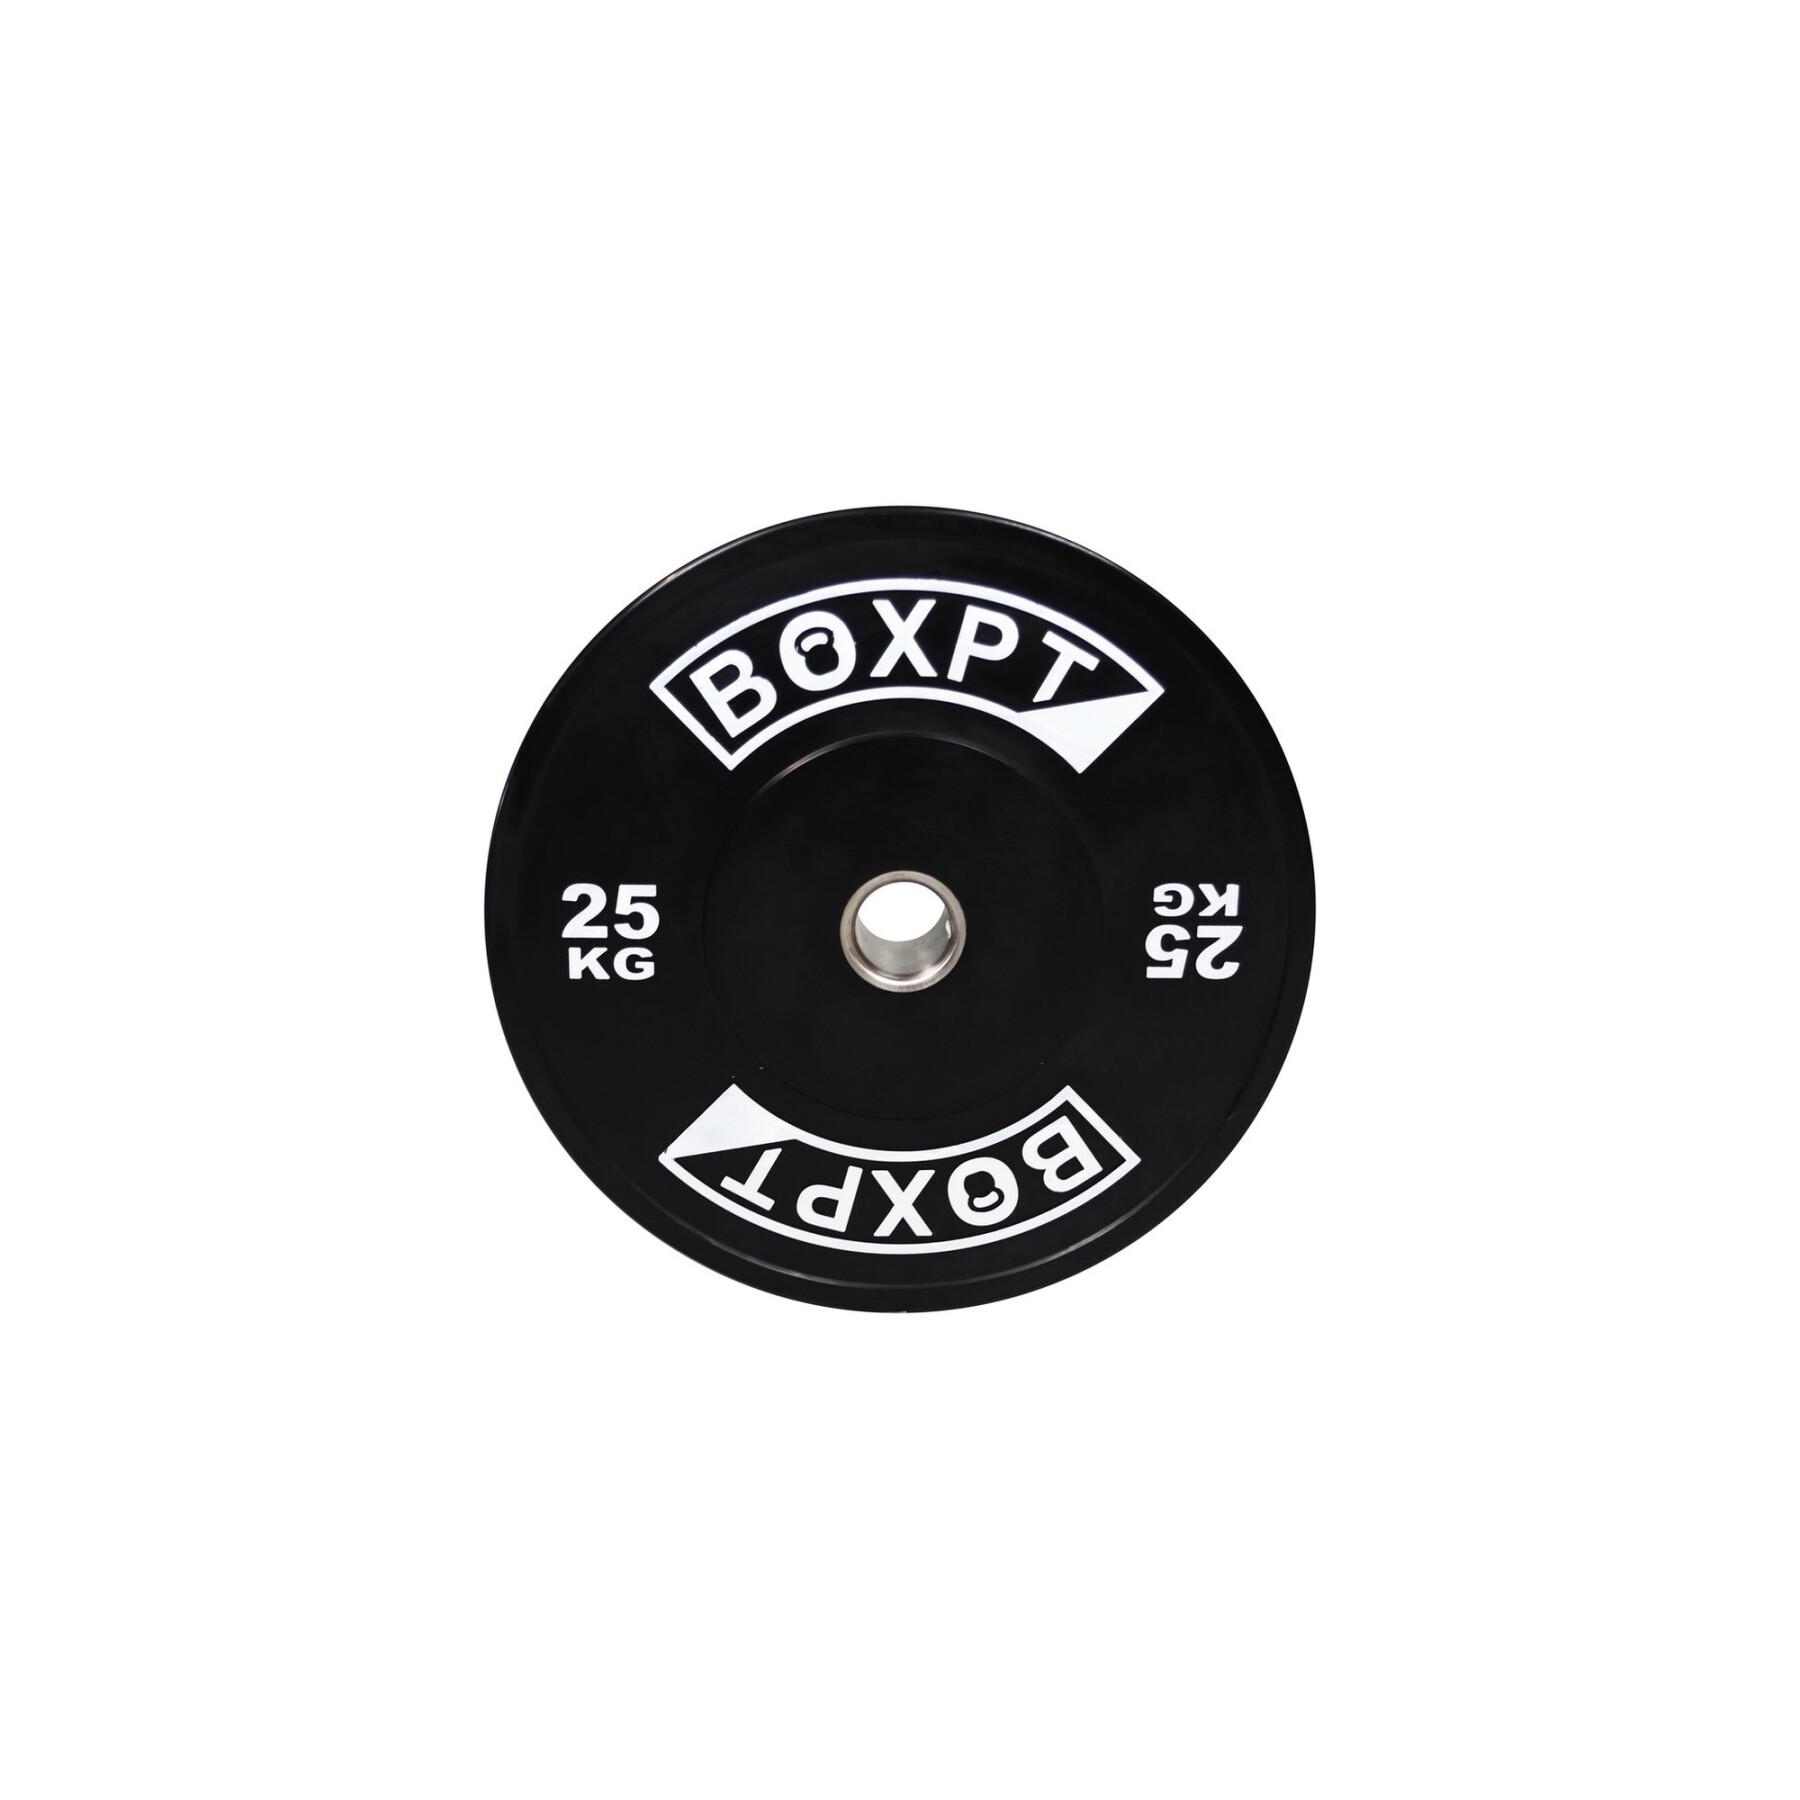 Disco de musculación Boxpt 2.0 - 25 kg